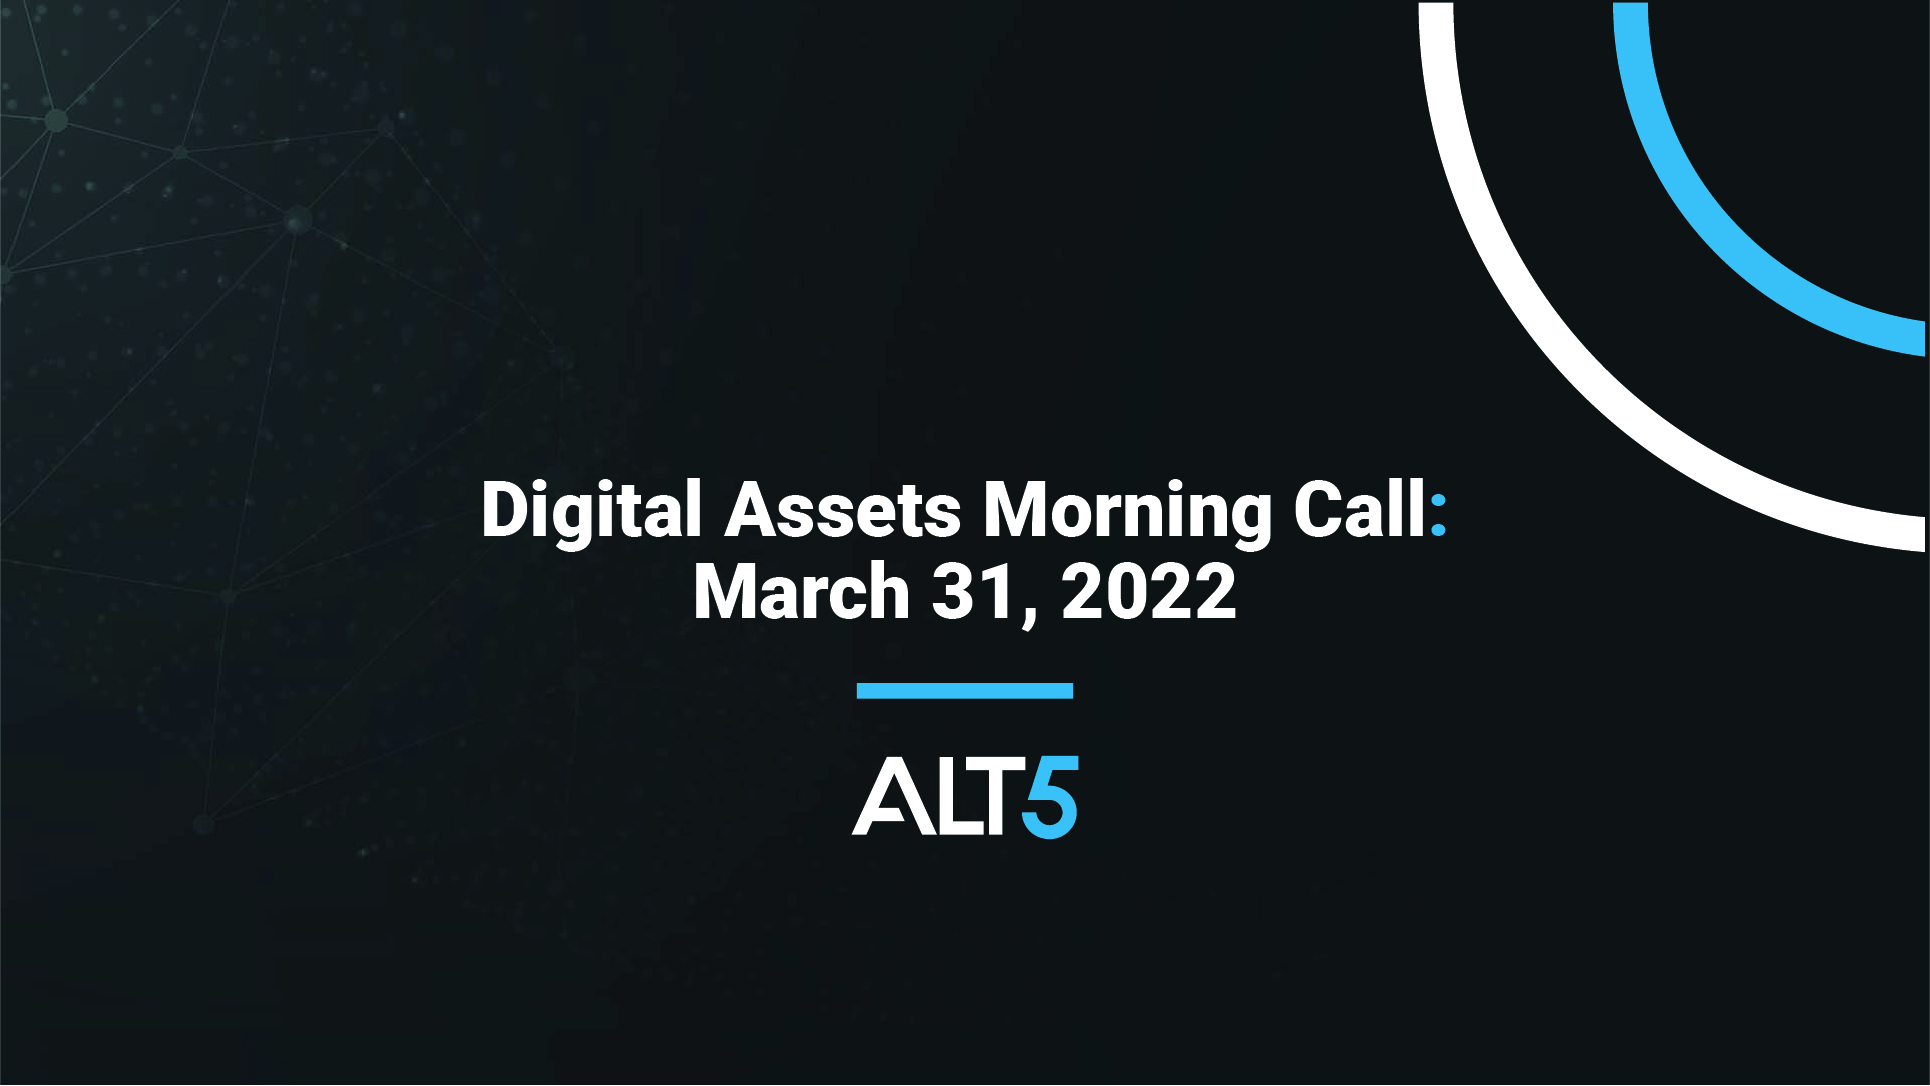 ALT 5 - Digital Assets Morning Call - March 31, 2022